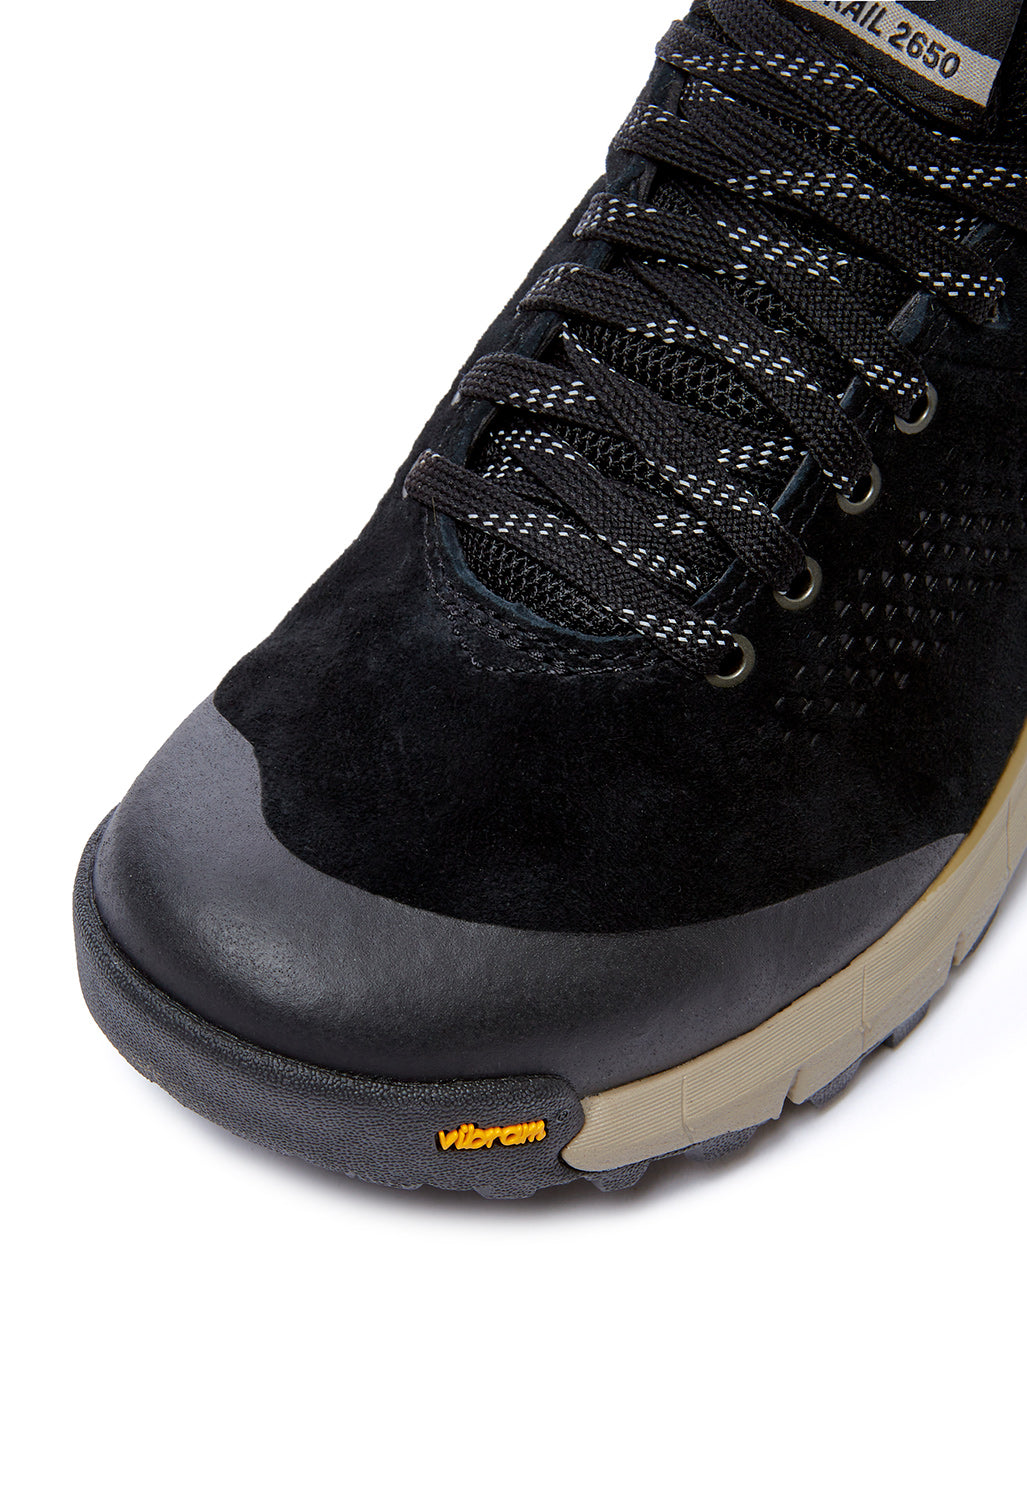 Danner Trail 2650 Mid GORE-TEX Women's Boots - Black / Khaki